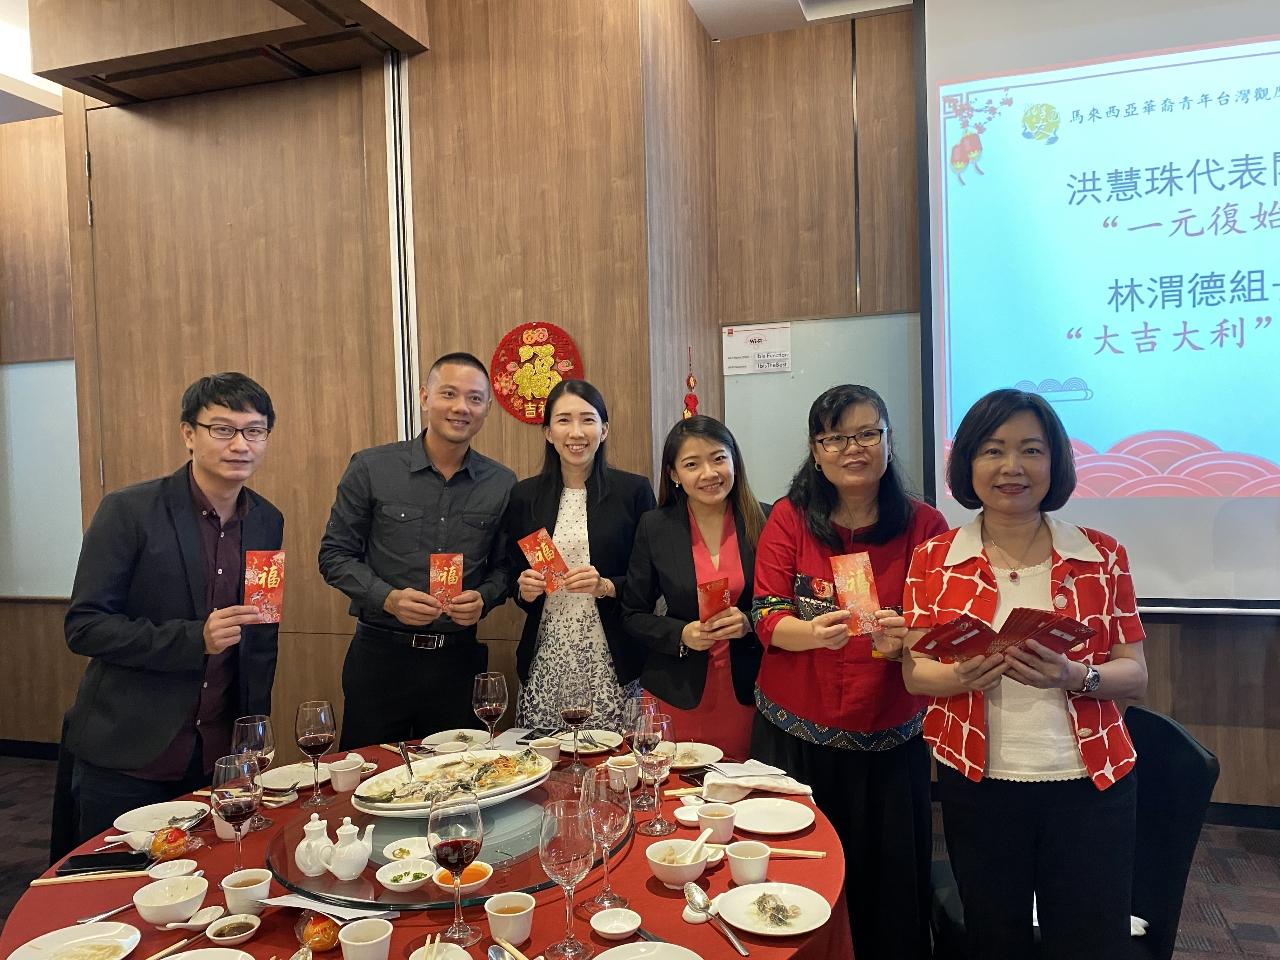  Wakil Anne Hung (tempat pertama di sebelah kanan) hantar sampul merah Tahun Baru Cina kepada peserta.